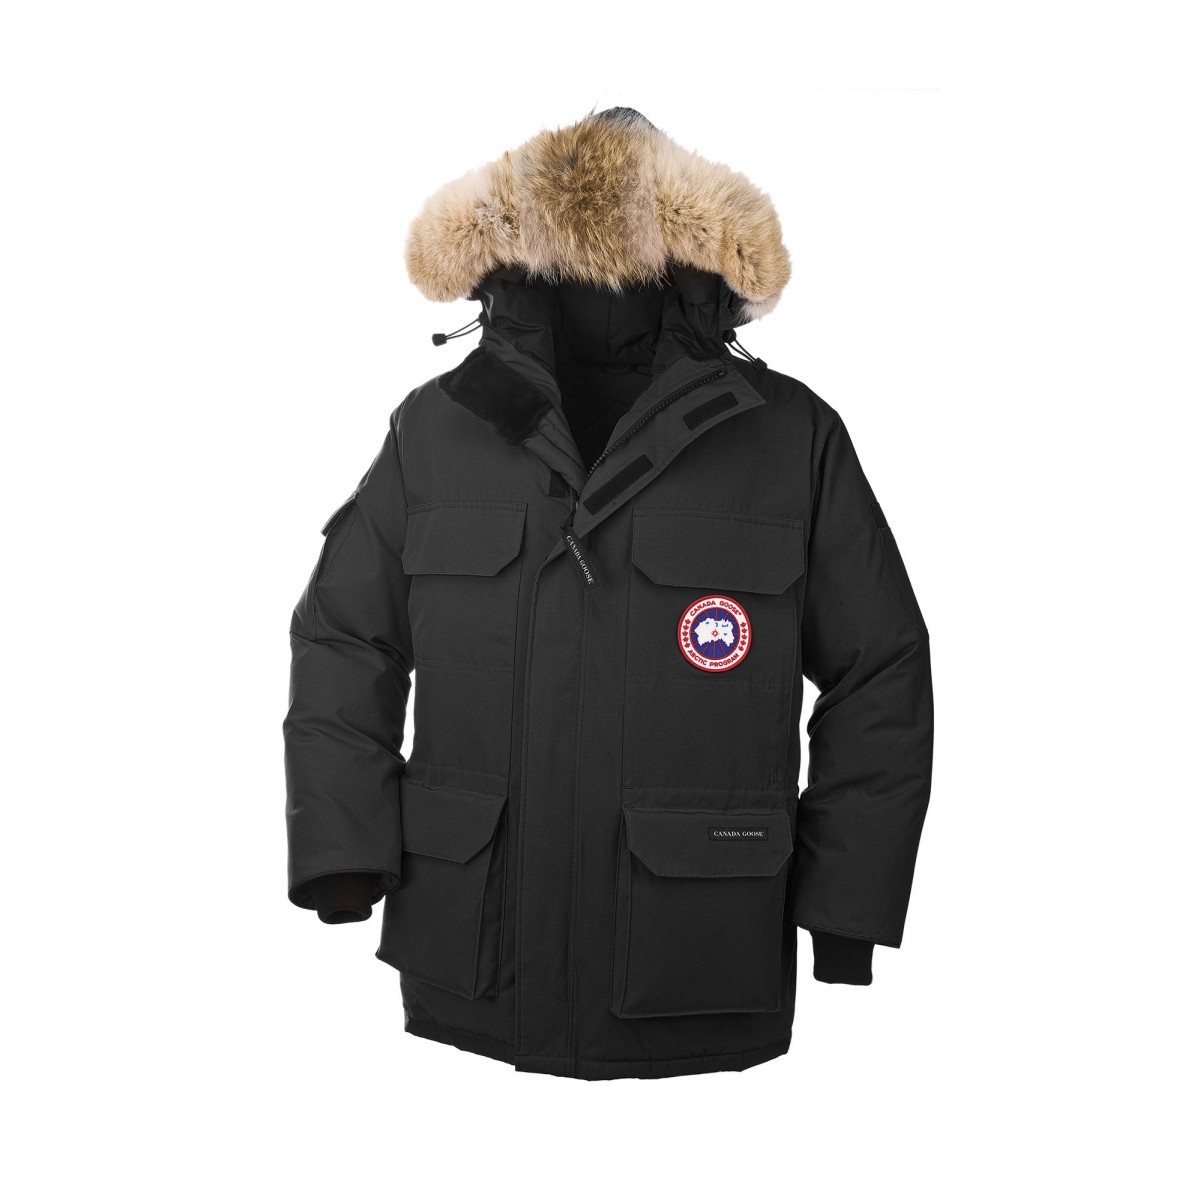 Canada Goose coats sale discounts - 70% Off Cheap Canada Goose Jackets Sale